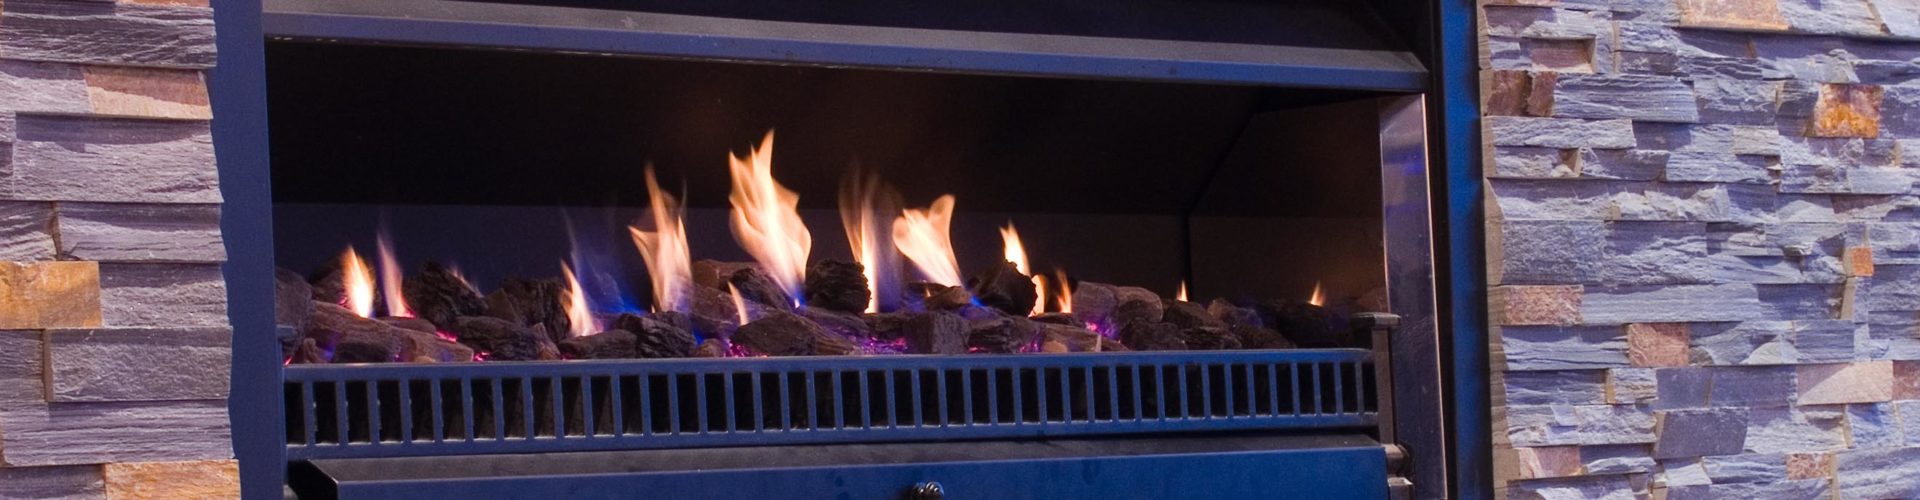 gas fireplace insert